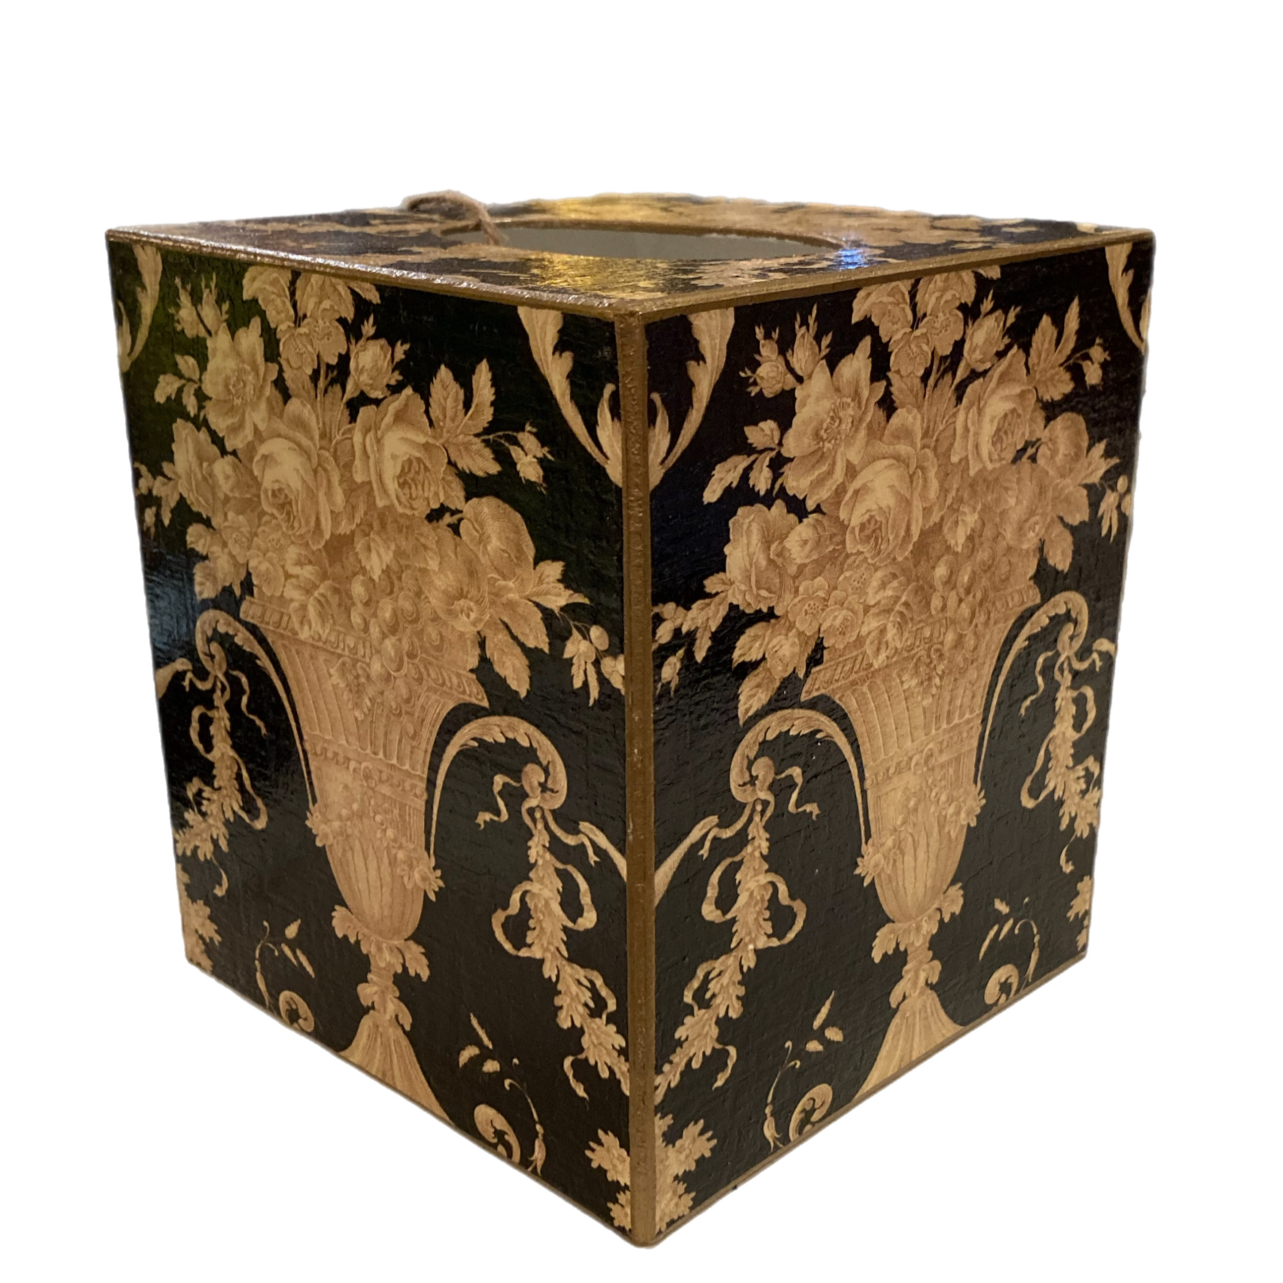 Vase Tissue Box Cover